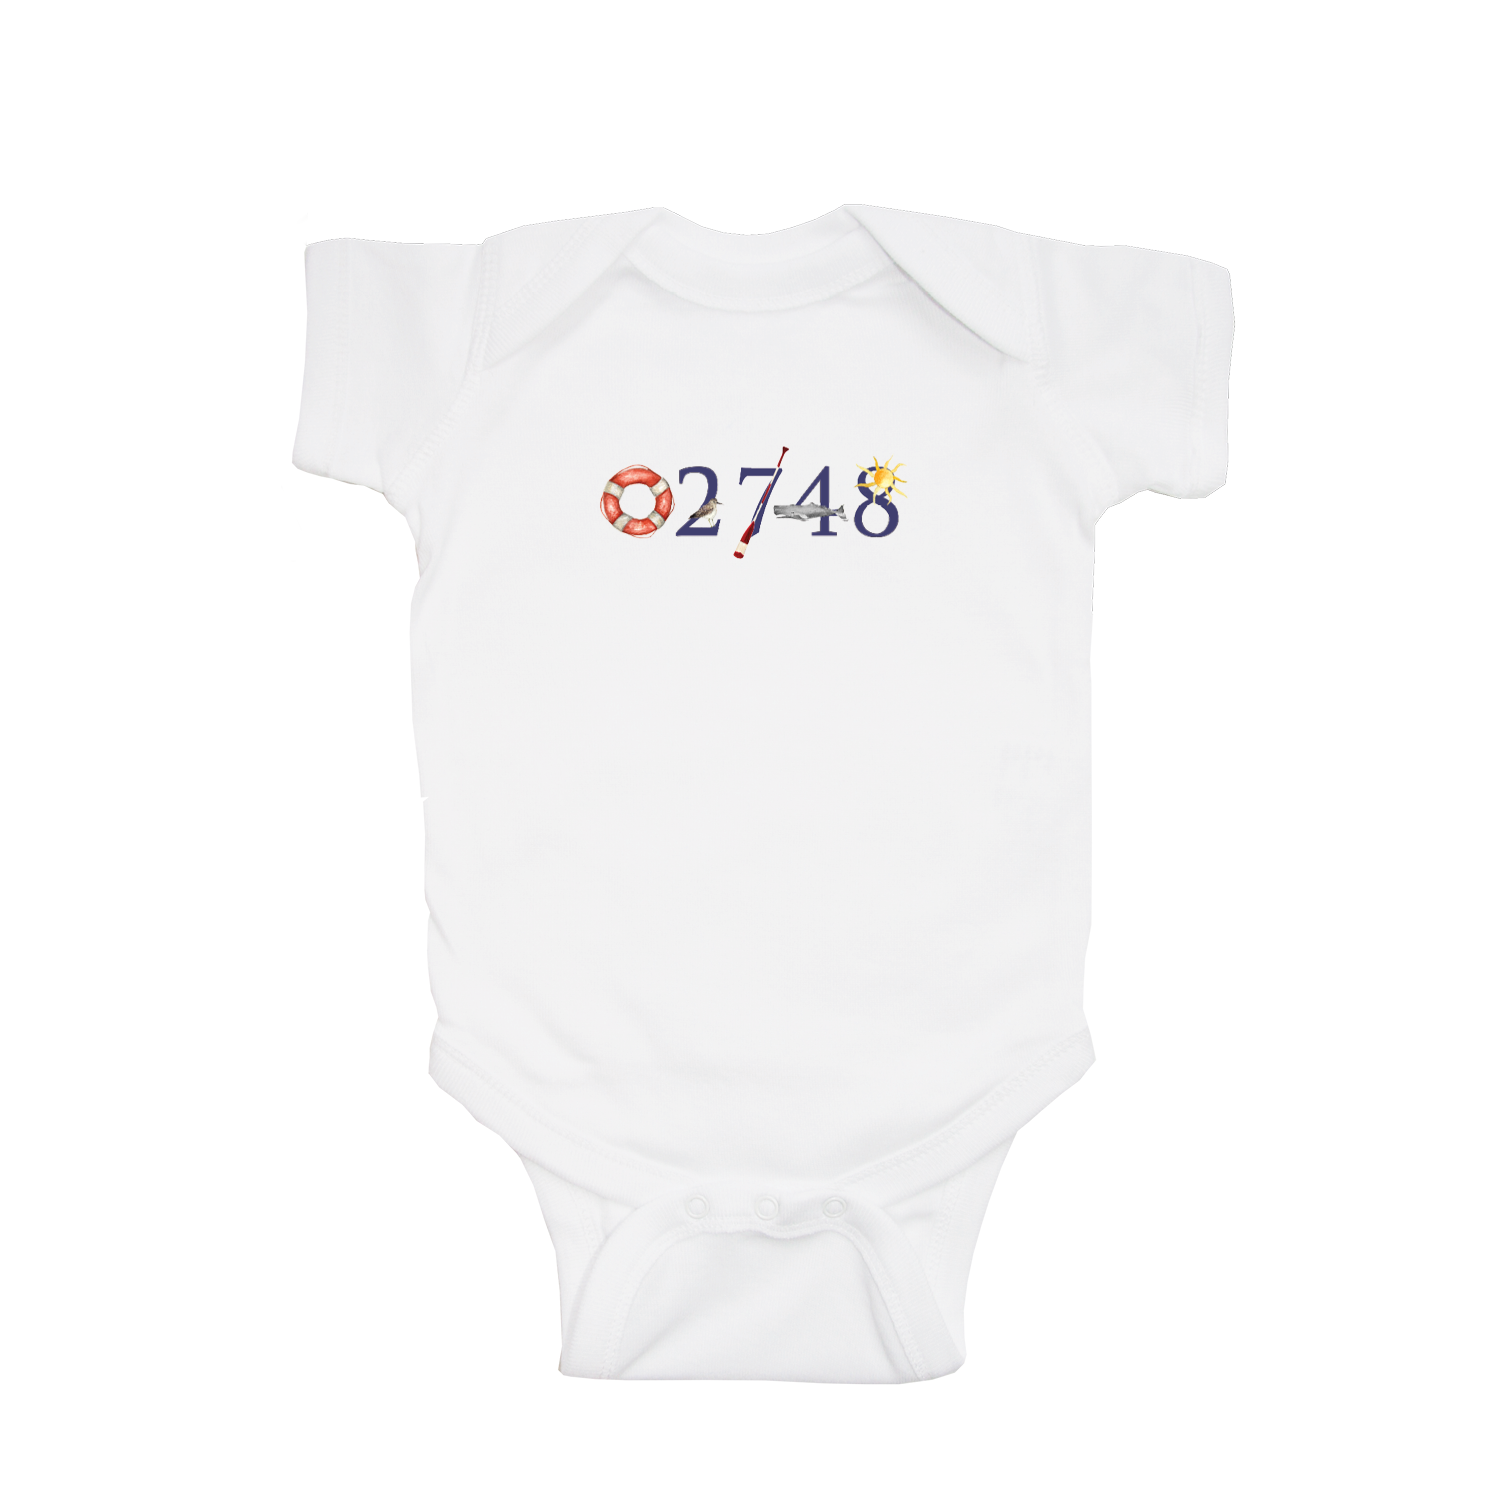 02748 dartmouth zip code baby snap up short sleeve